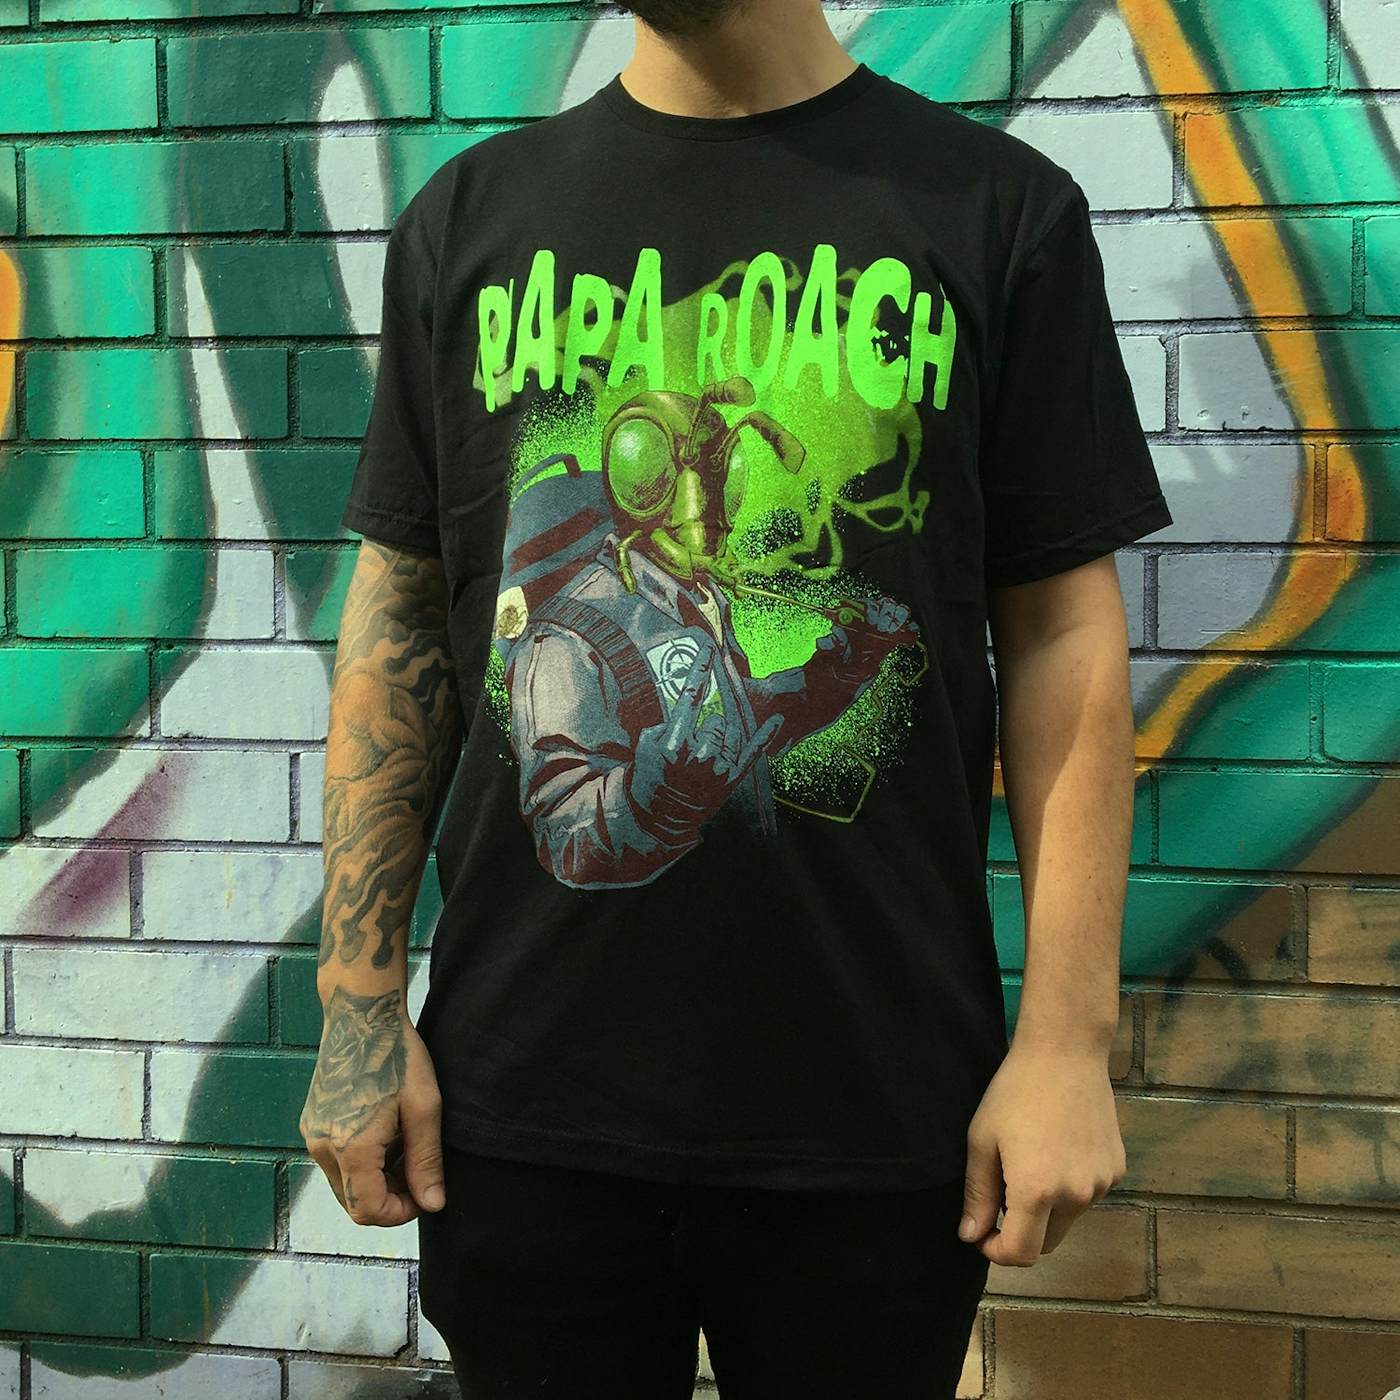 Papa Roach Exterminator T-Shirt (Black)